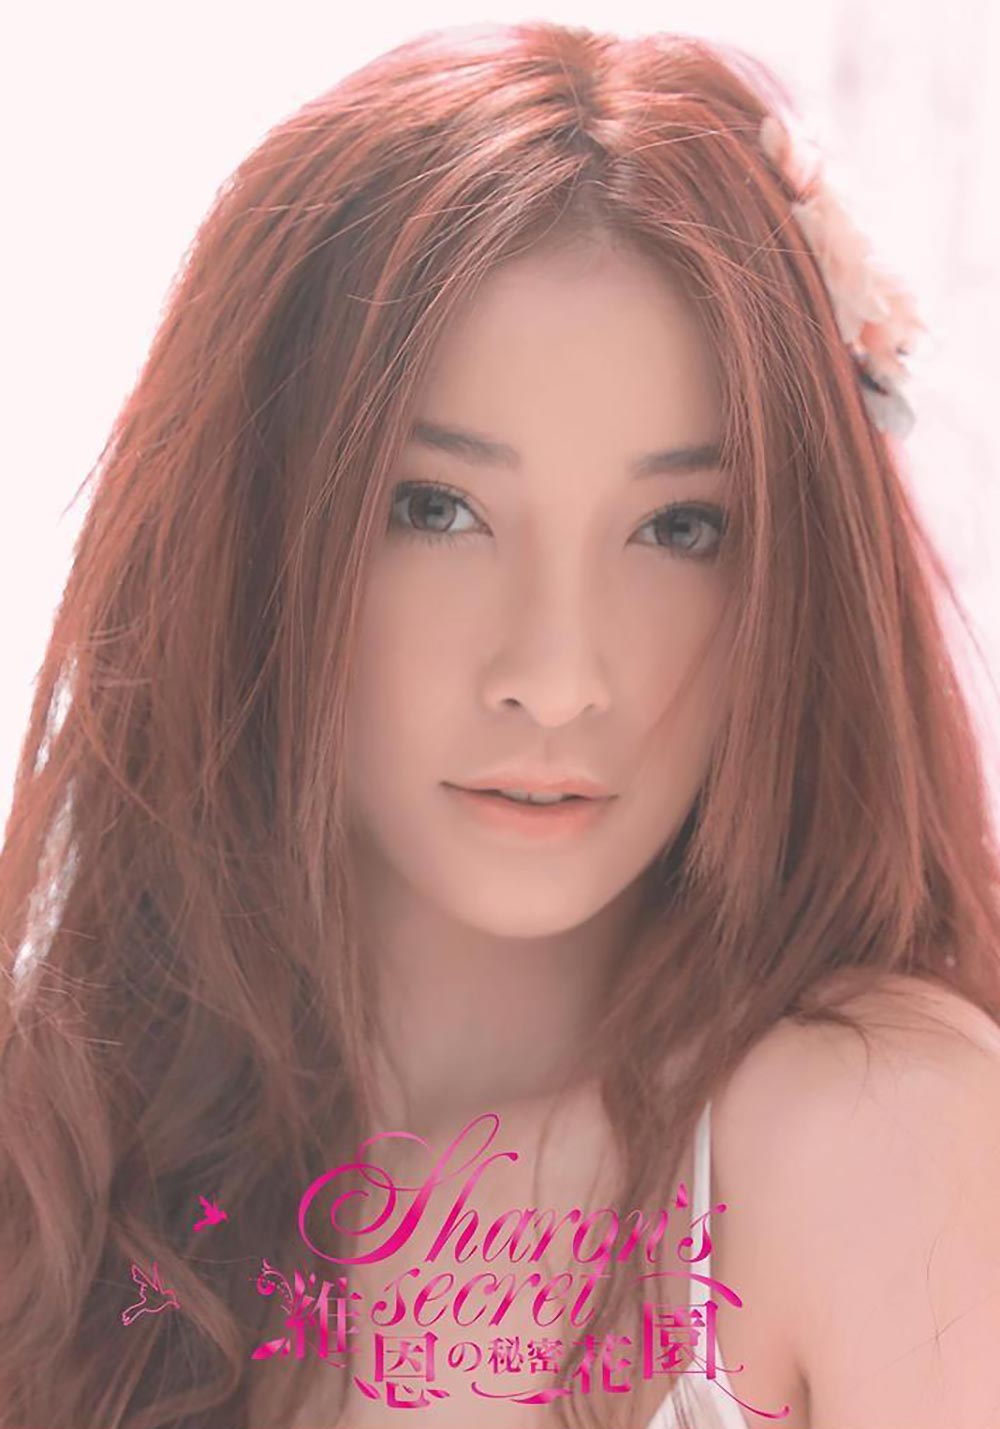 Taiwanese model Sharon Hsu 許維恩 makeup and beauty tips